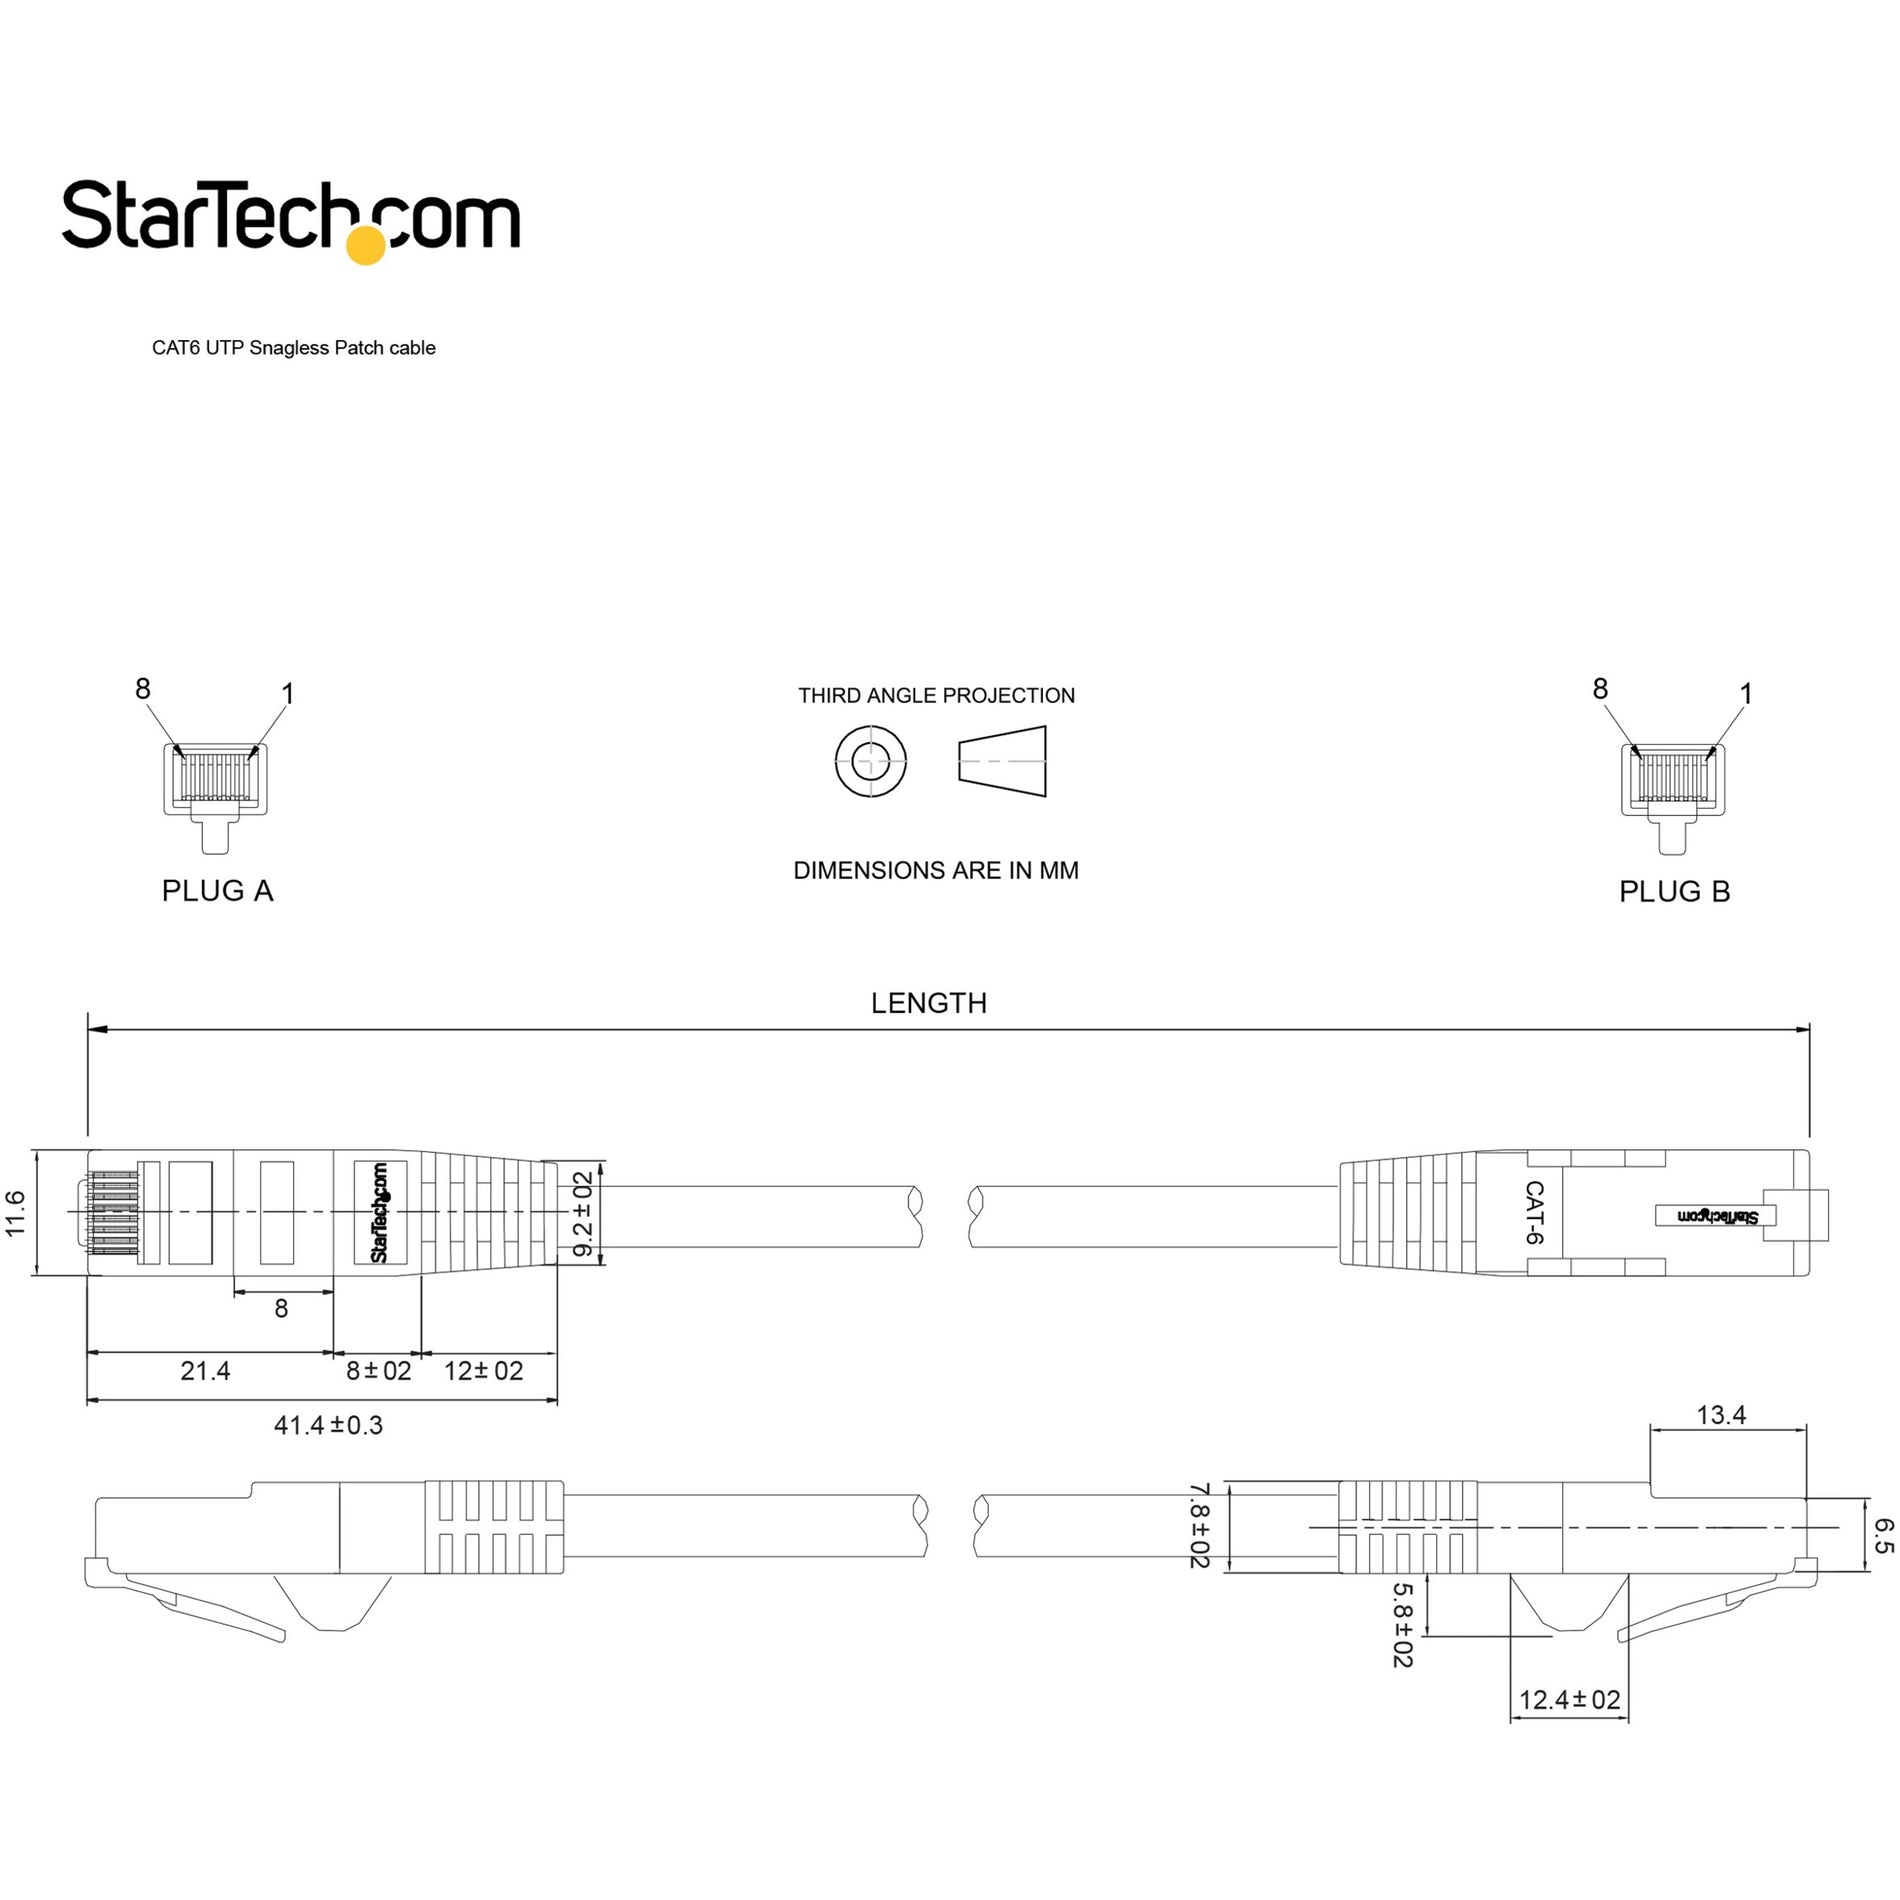 StarTech.com N6PATCH1BL Cat6 パッチケーブル、1 フィート、10 Gbps のデータ転送レート、ブルー StarTech.comを翻訳：スターテックドットコム